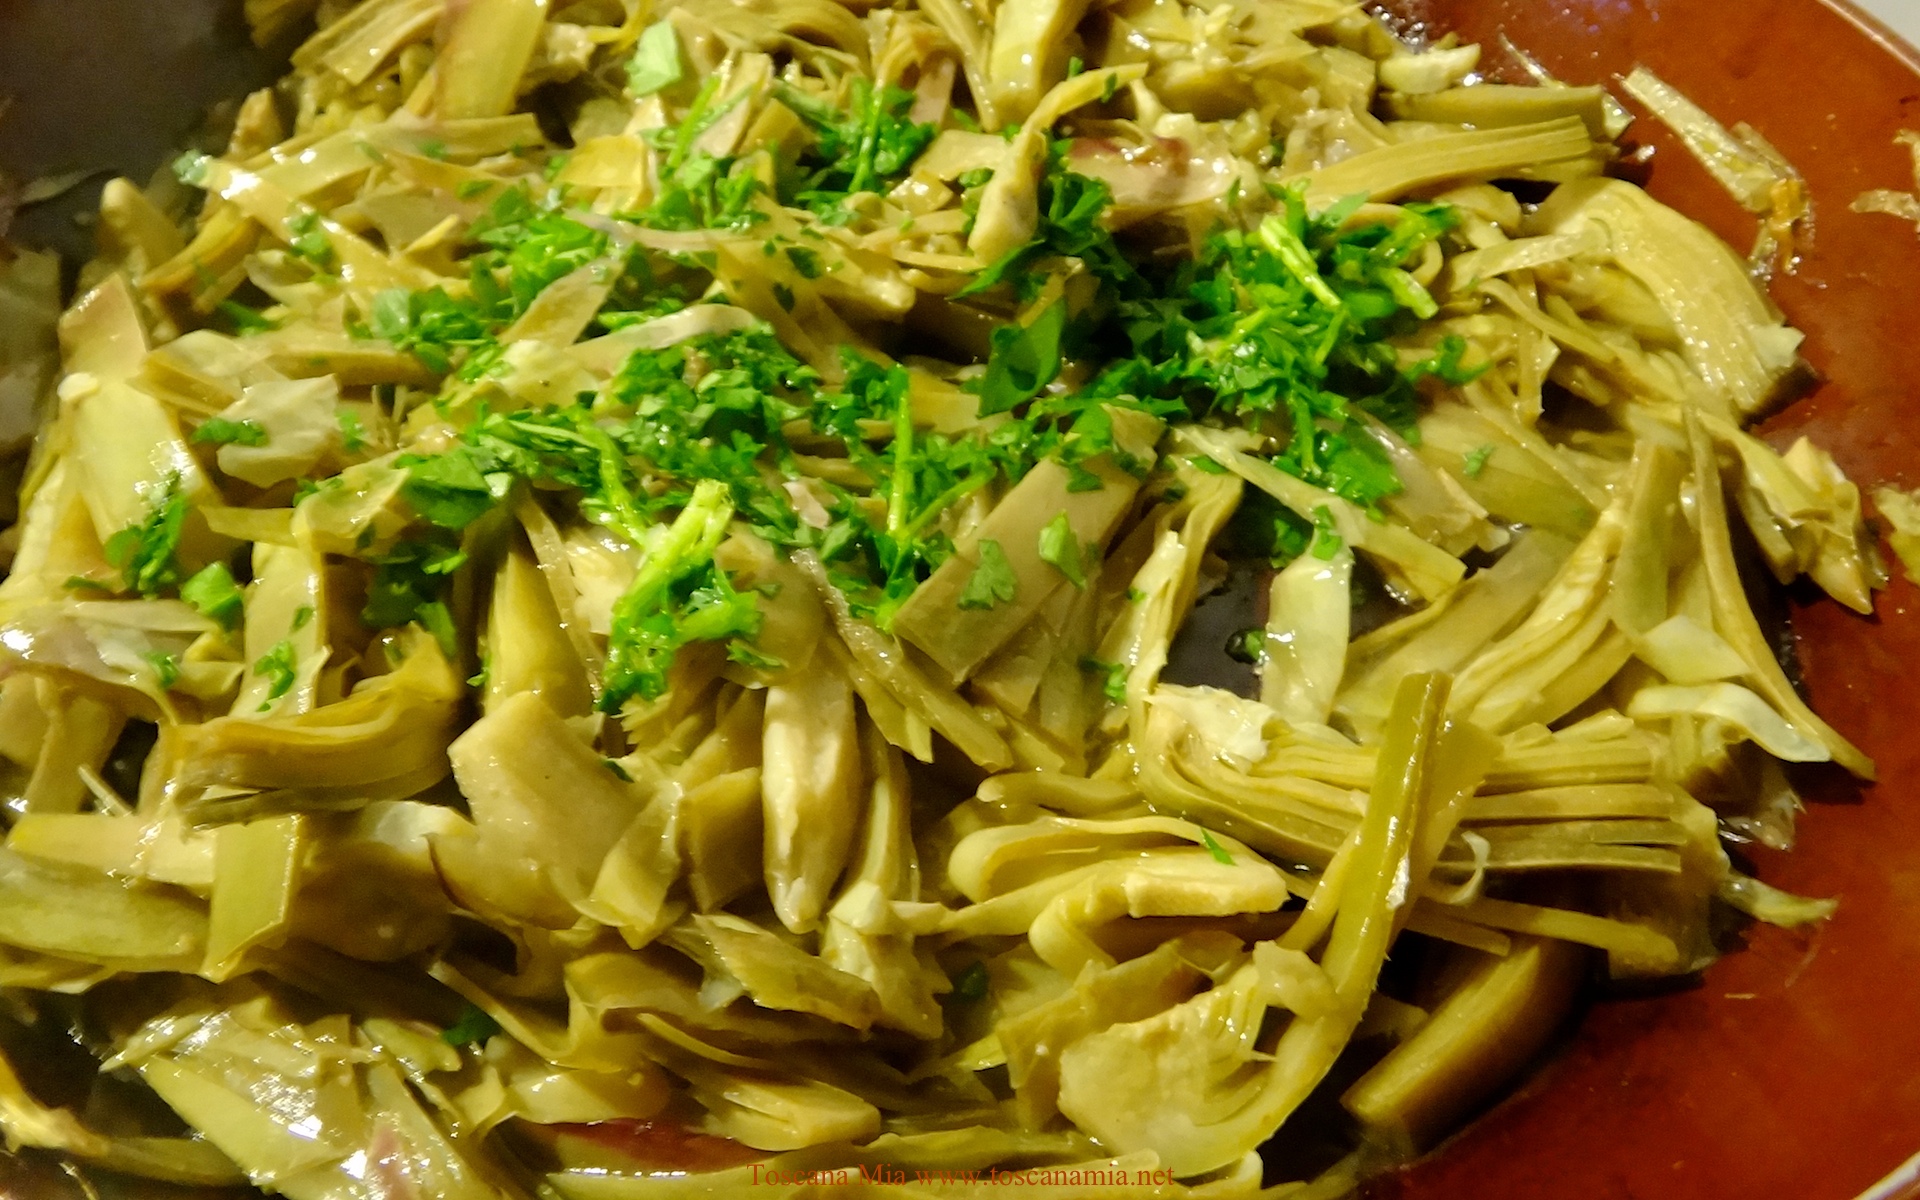 Top 10 herbs to cook Italian 3 Parsley = Prezzemolo | Toscana Mia